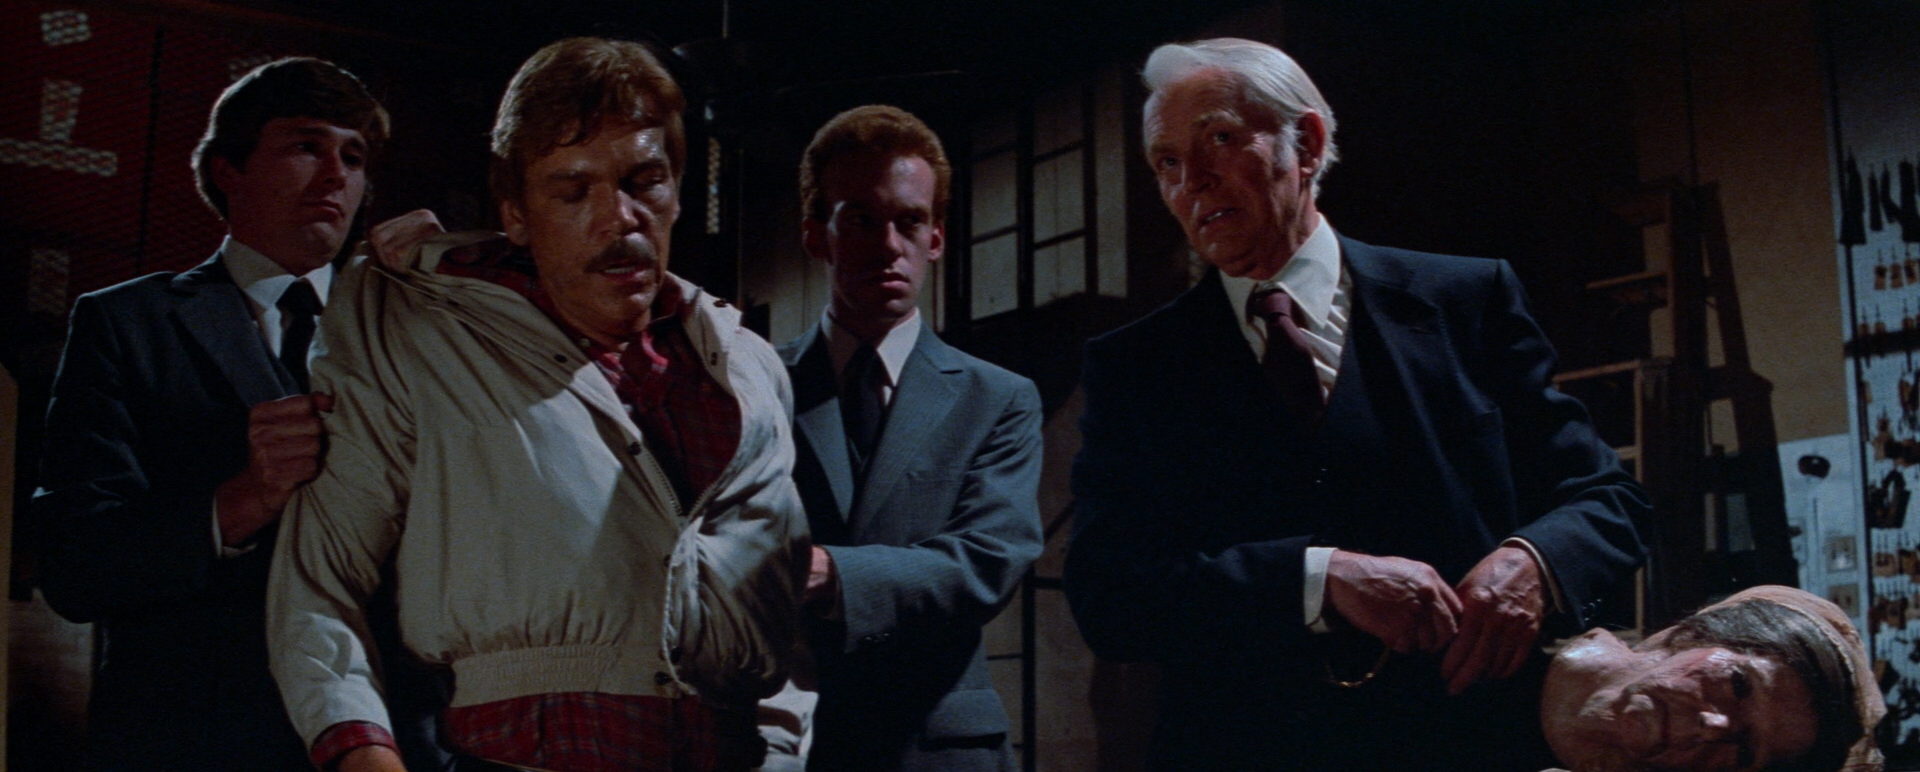 Tom Atkins as Dr. Challis